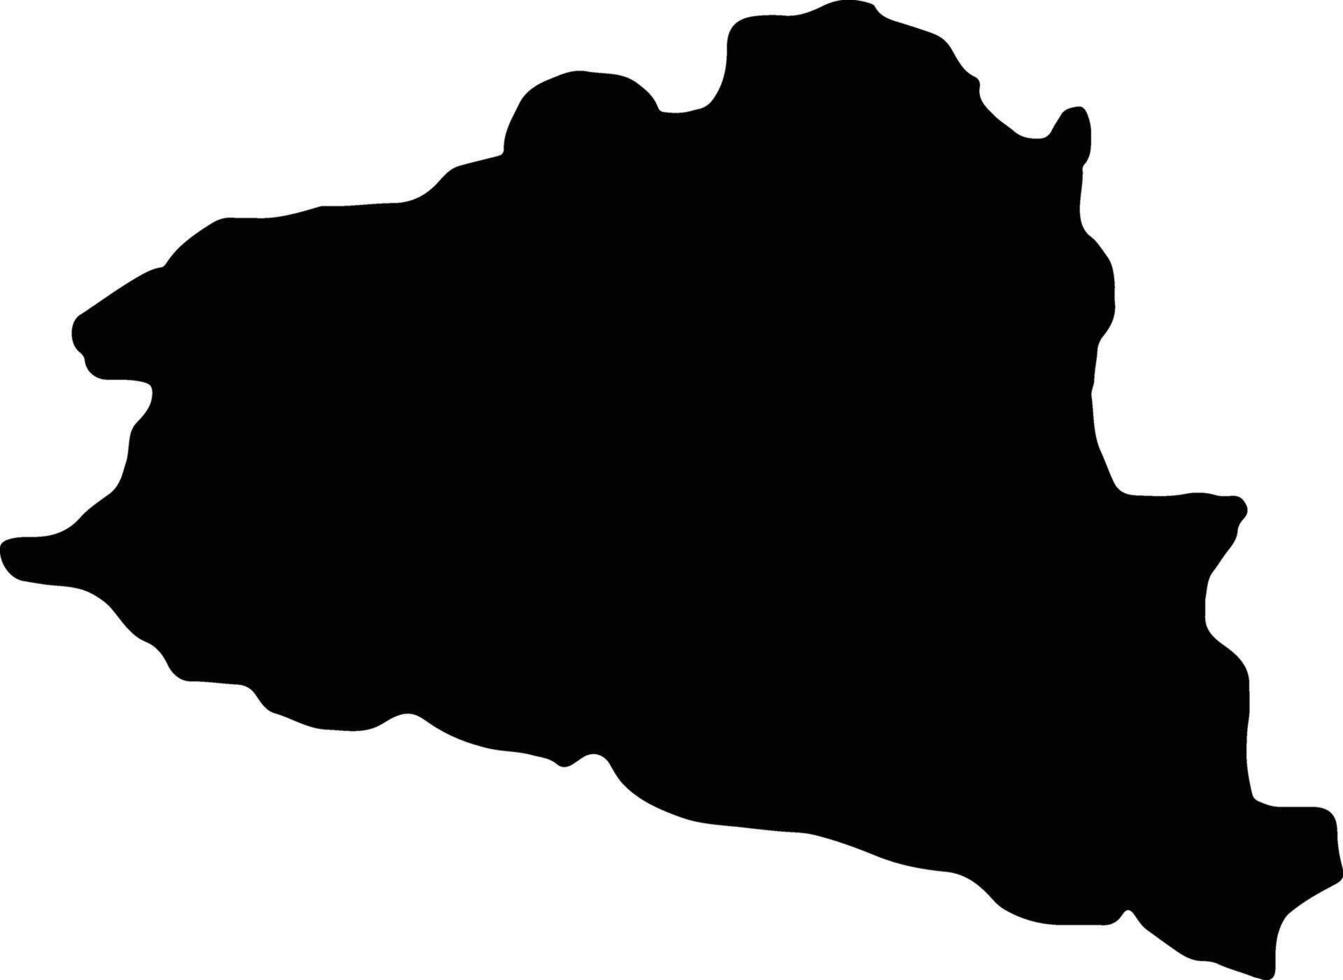 prilepa macedonia silhouette carta geografica vettore